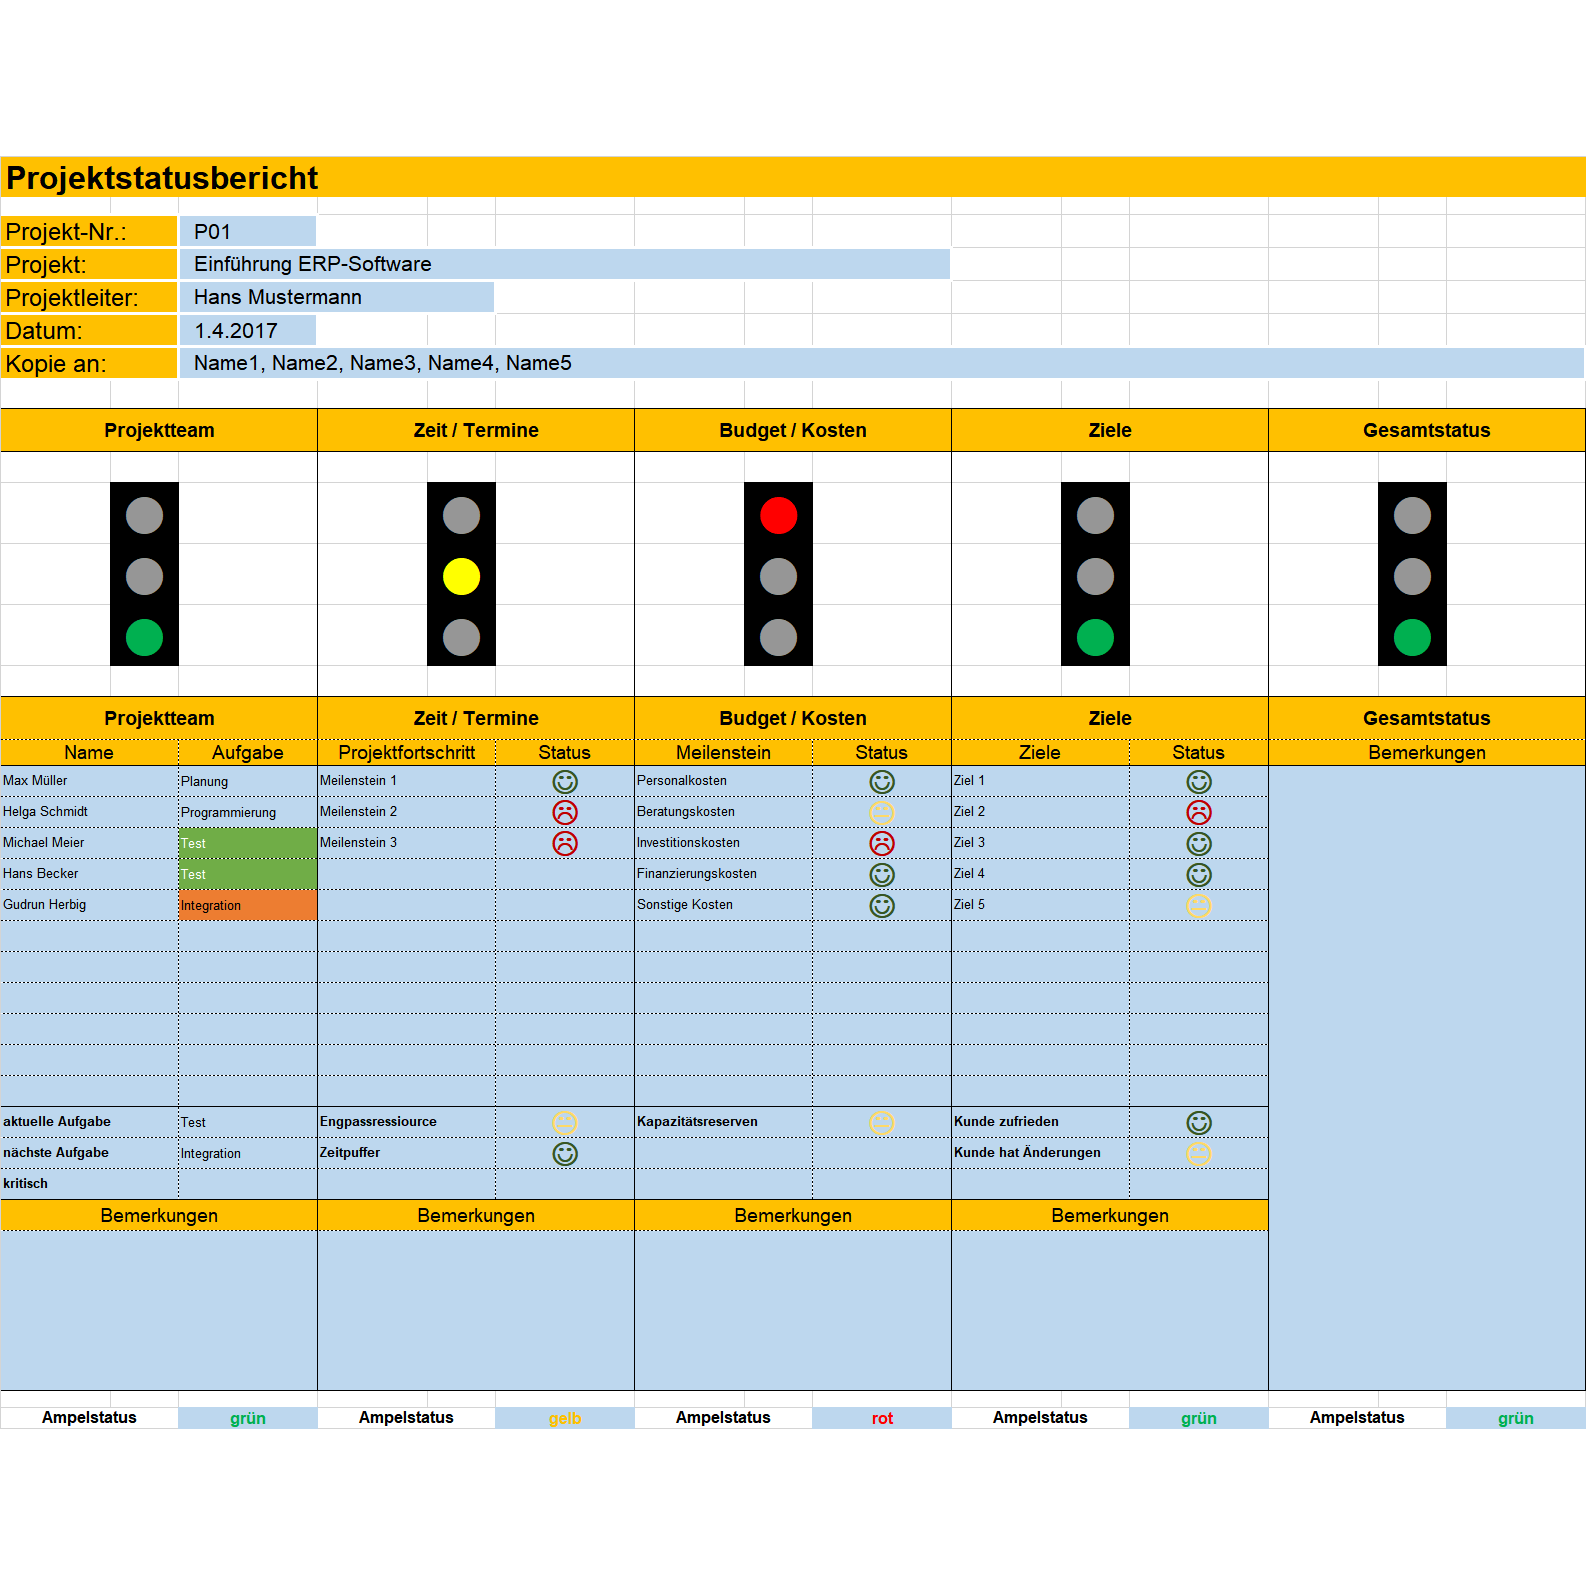 Projektstatusbericht Excel - The folder location is ...